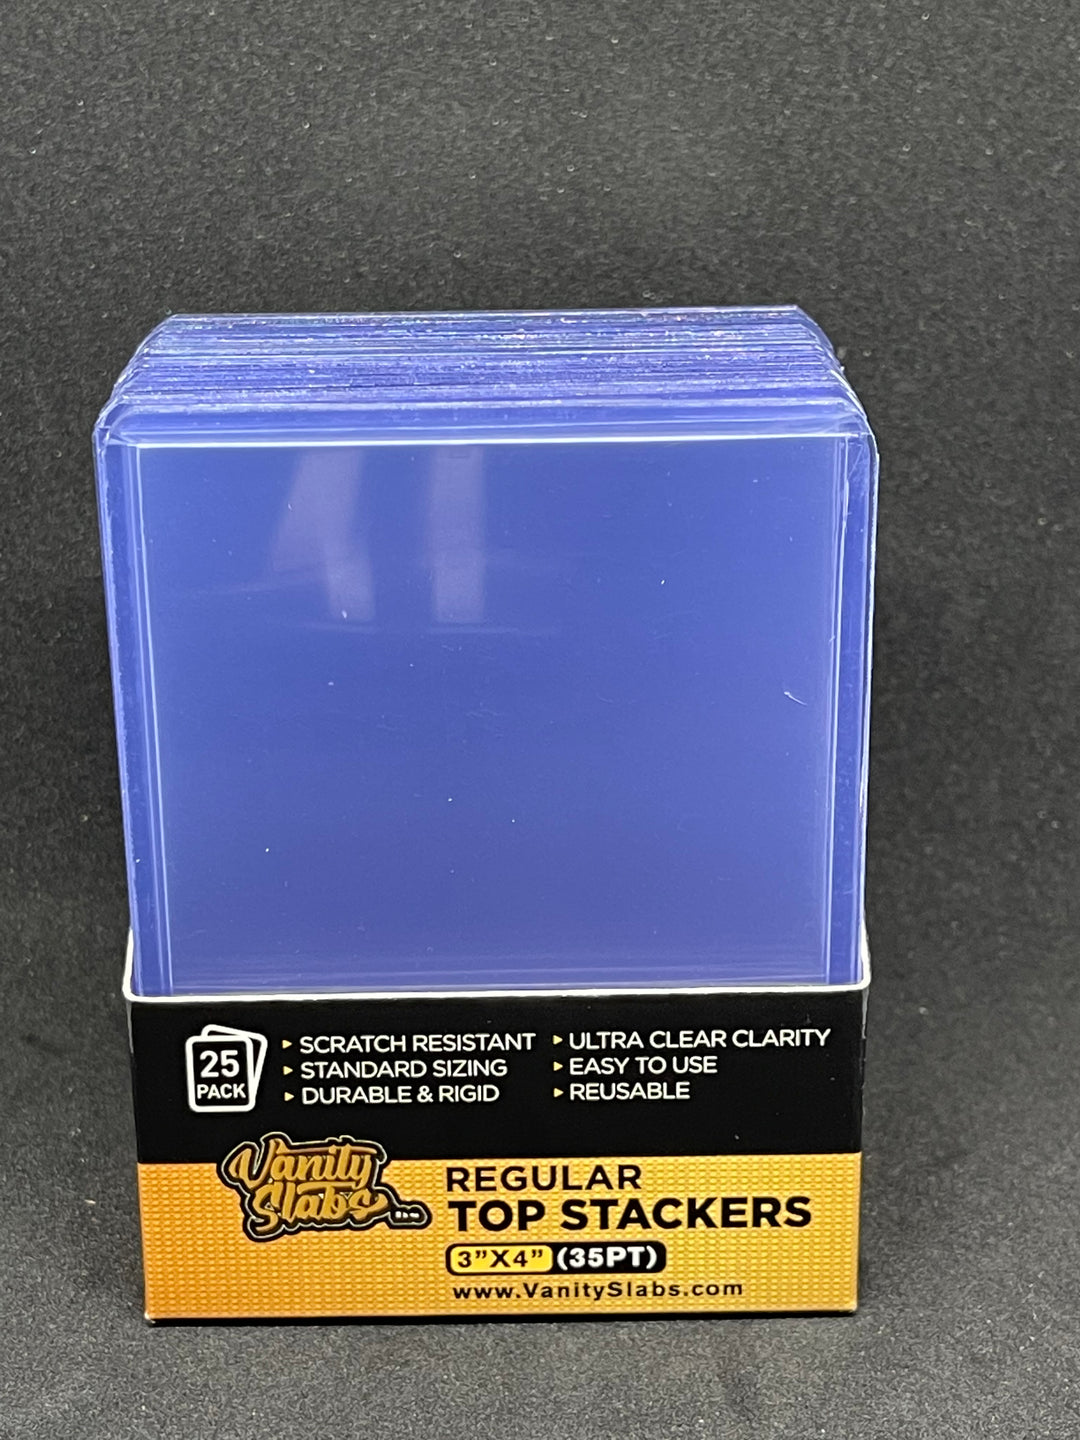 Regular Top Stackers 35pt Card Loaders 25 Pack